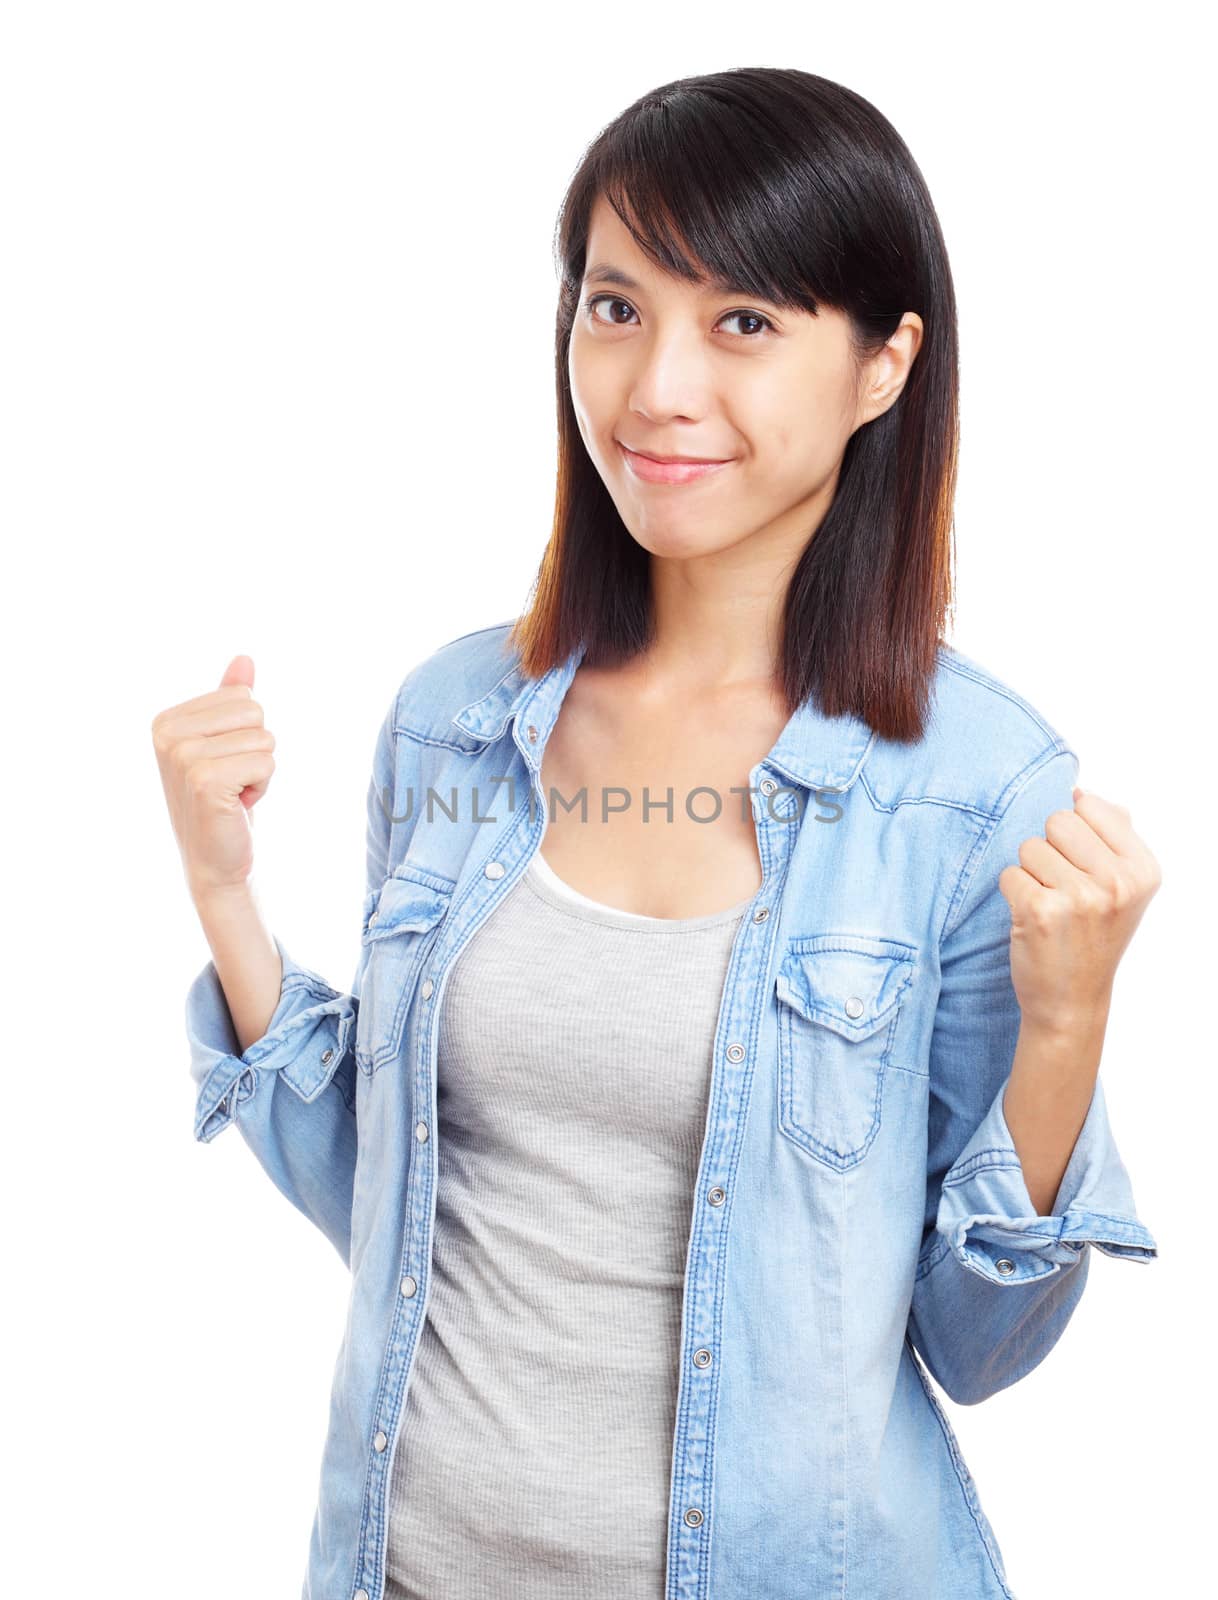 Cheerful asian woman by leungchopan